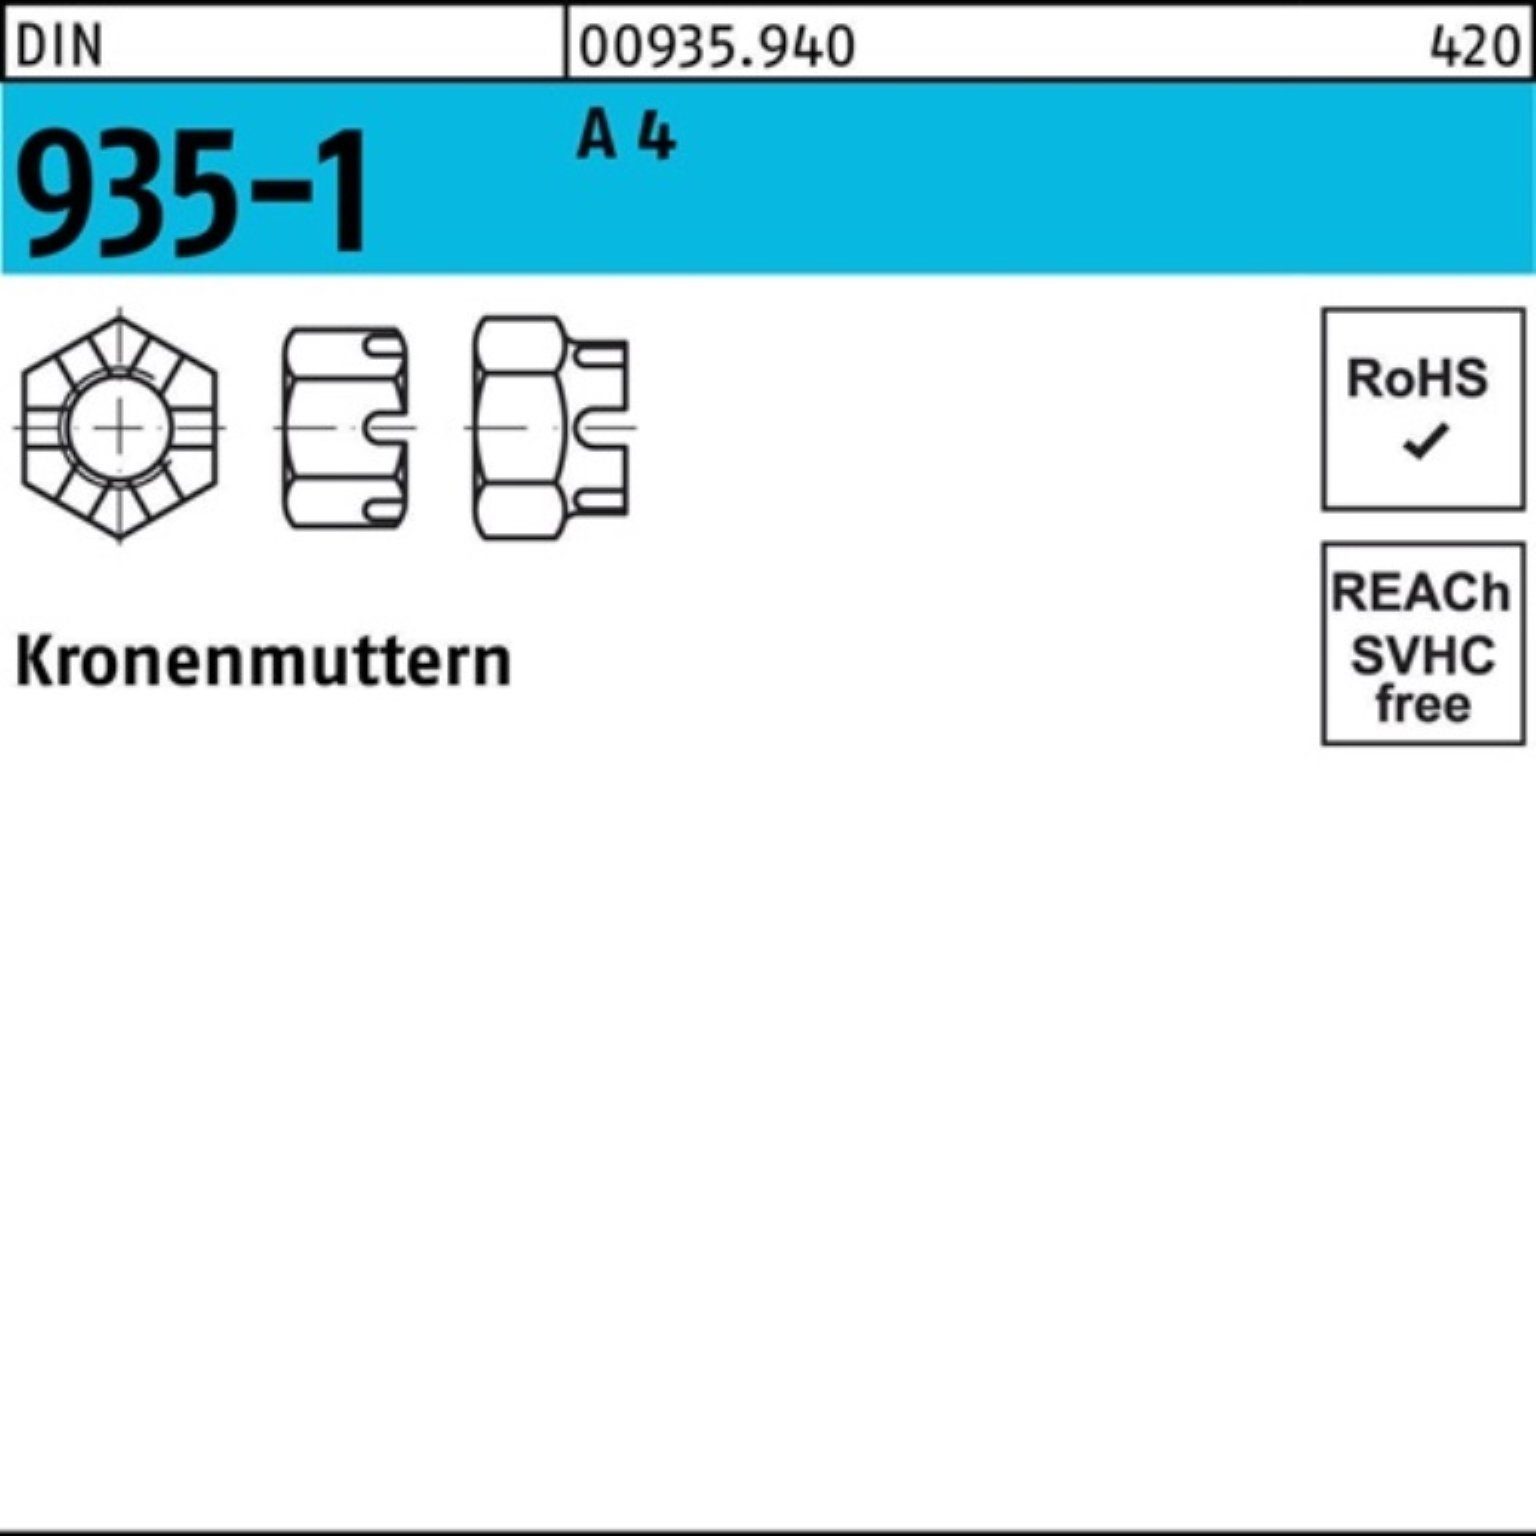 Reyher Kronenmutter 100er Pack Kronenmutter DIN 935-1 M8 A 4 25 Stück DIN 935-1 A 4 Krone